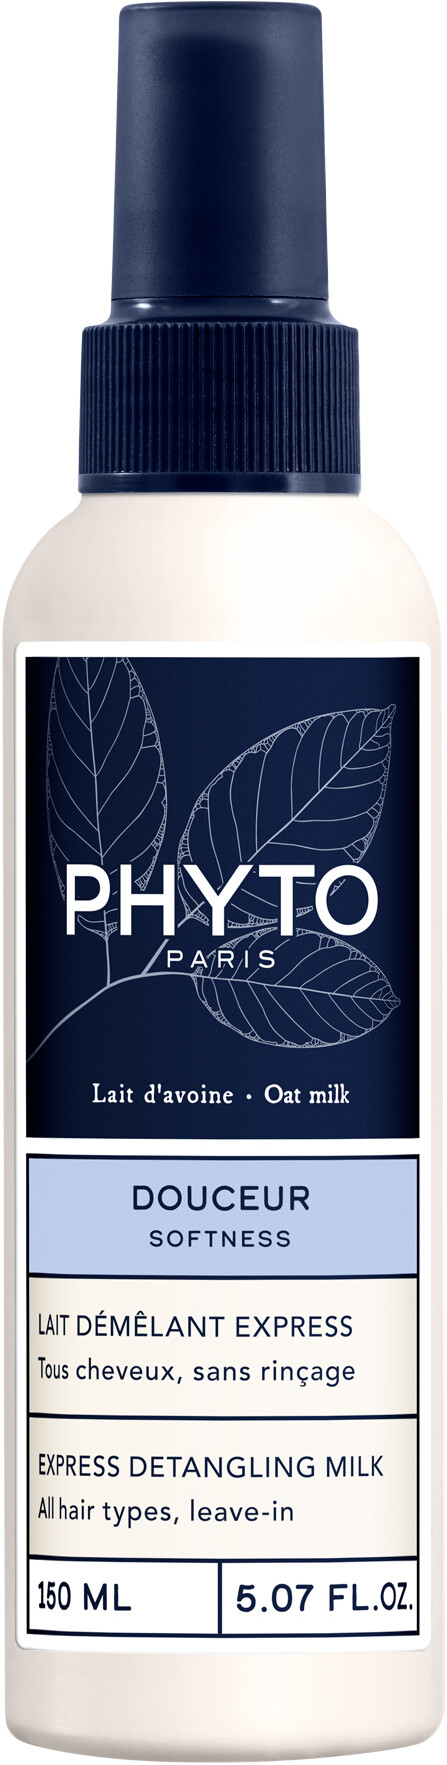 Phyto Softness Express Detangling Milk 150ml